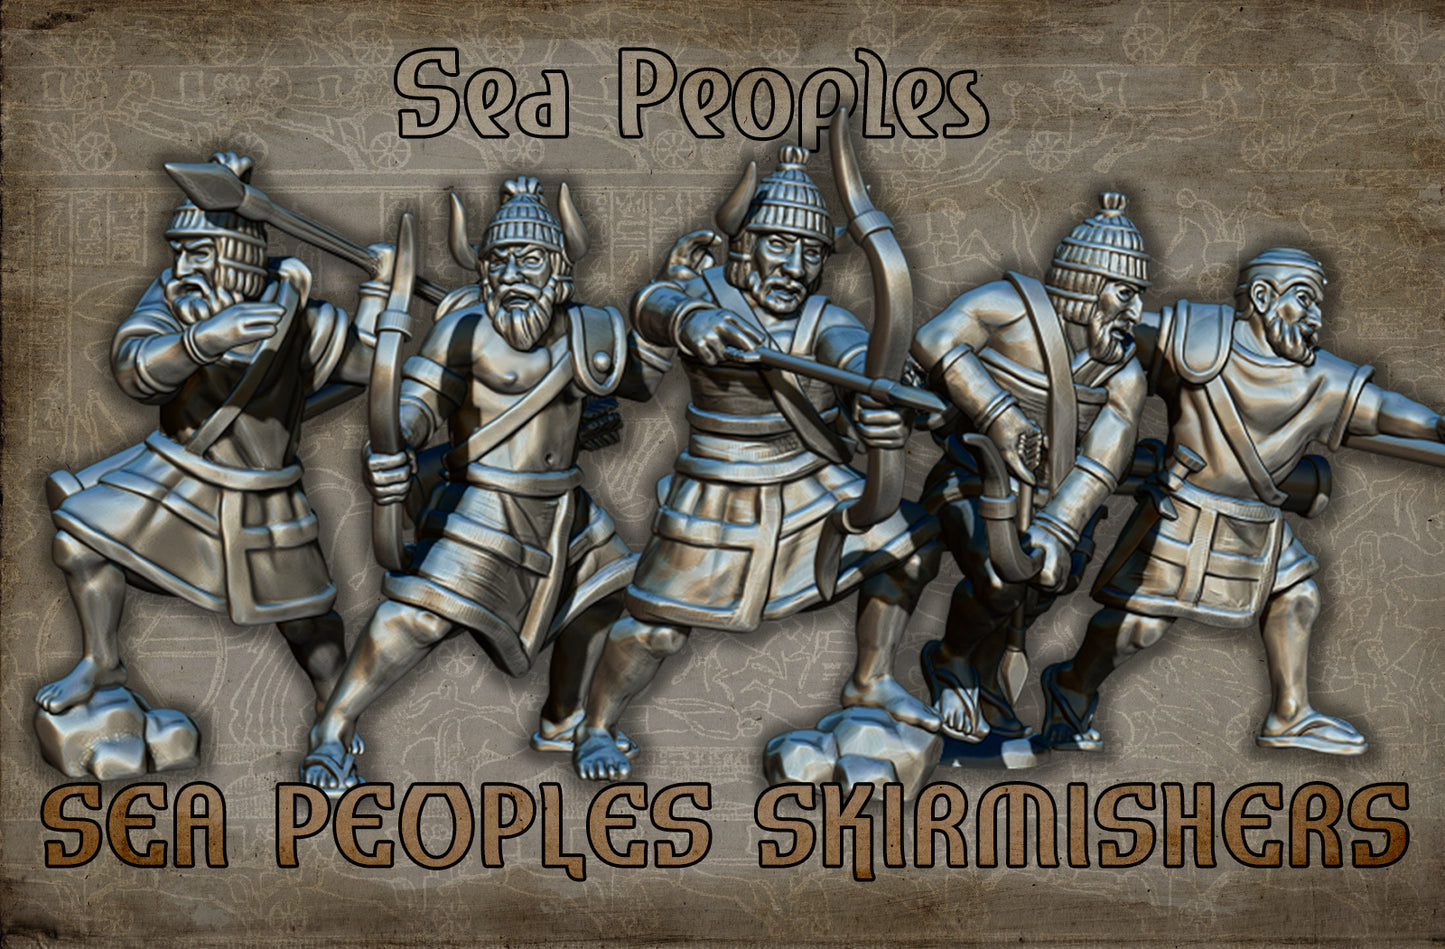 Sea Peoples Skirmishers